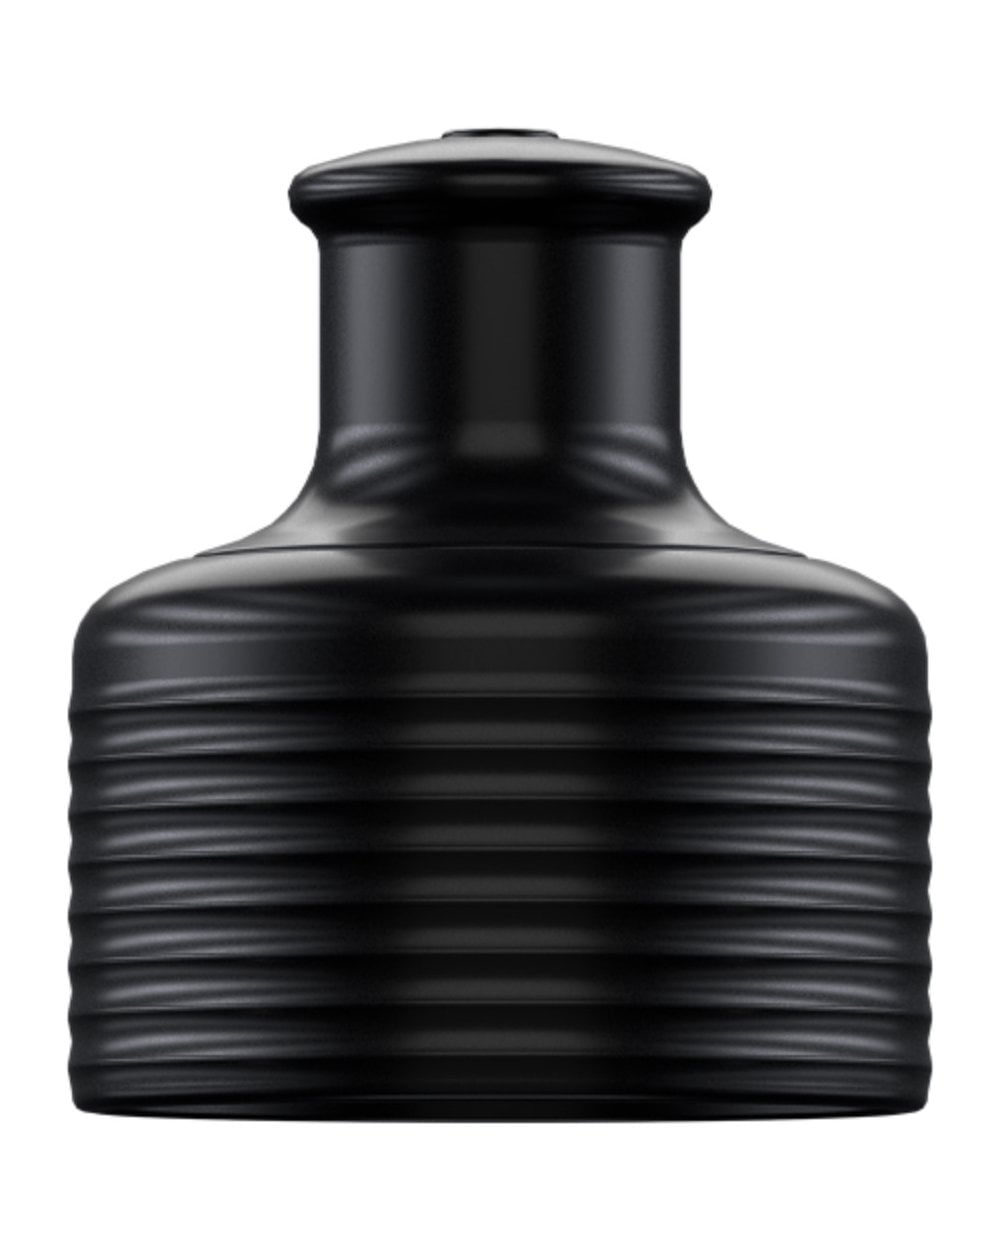 Monochrome Black Sports Lid for 750ml Bottle